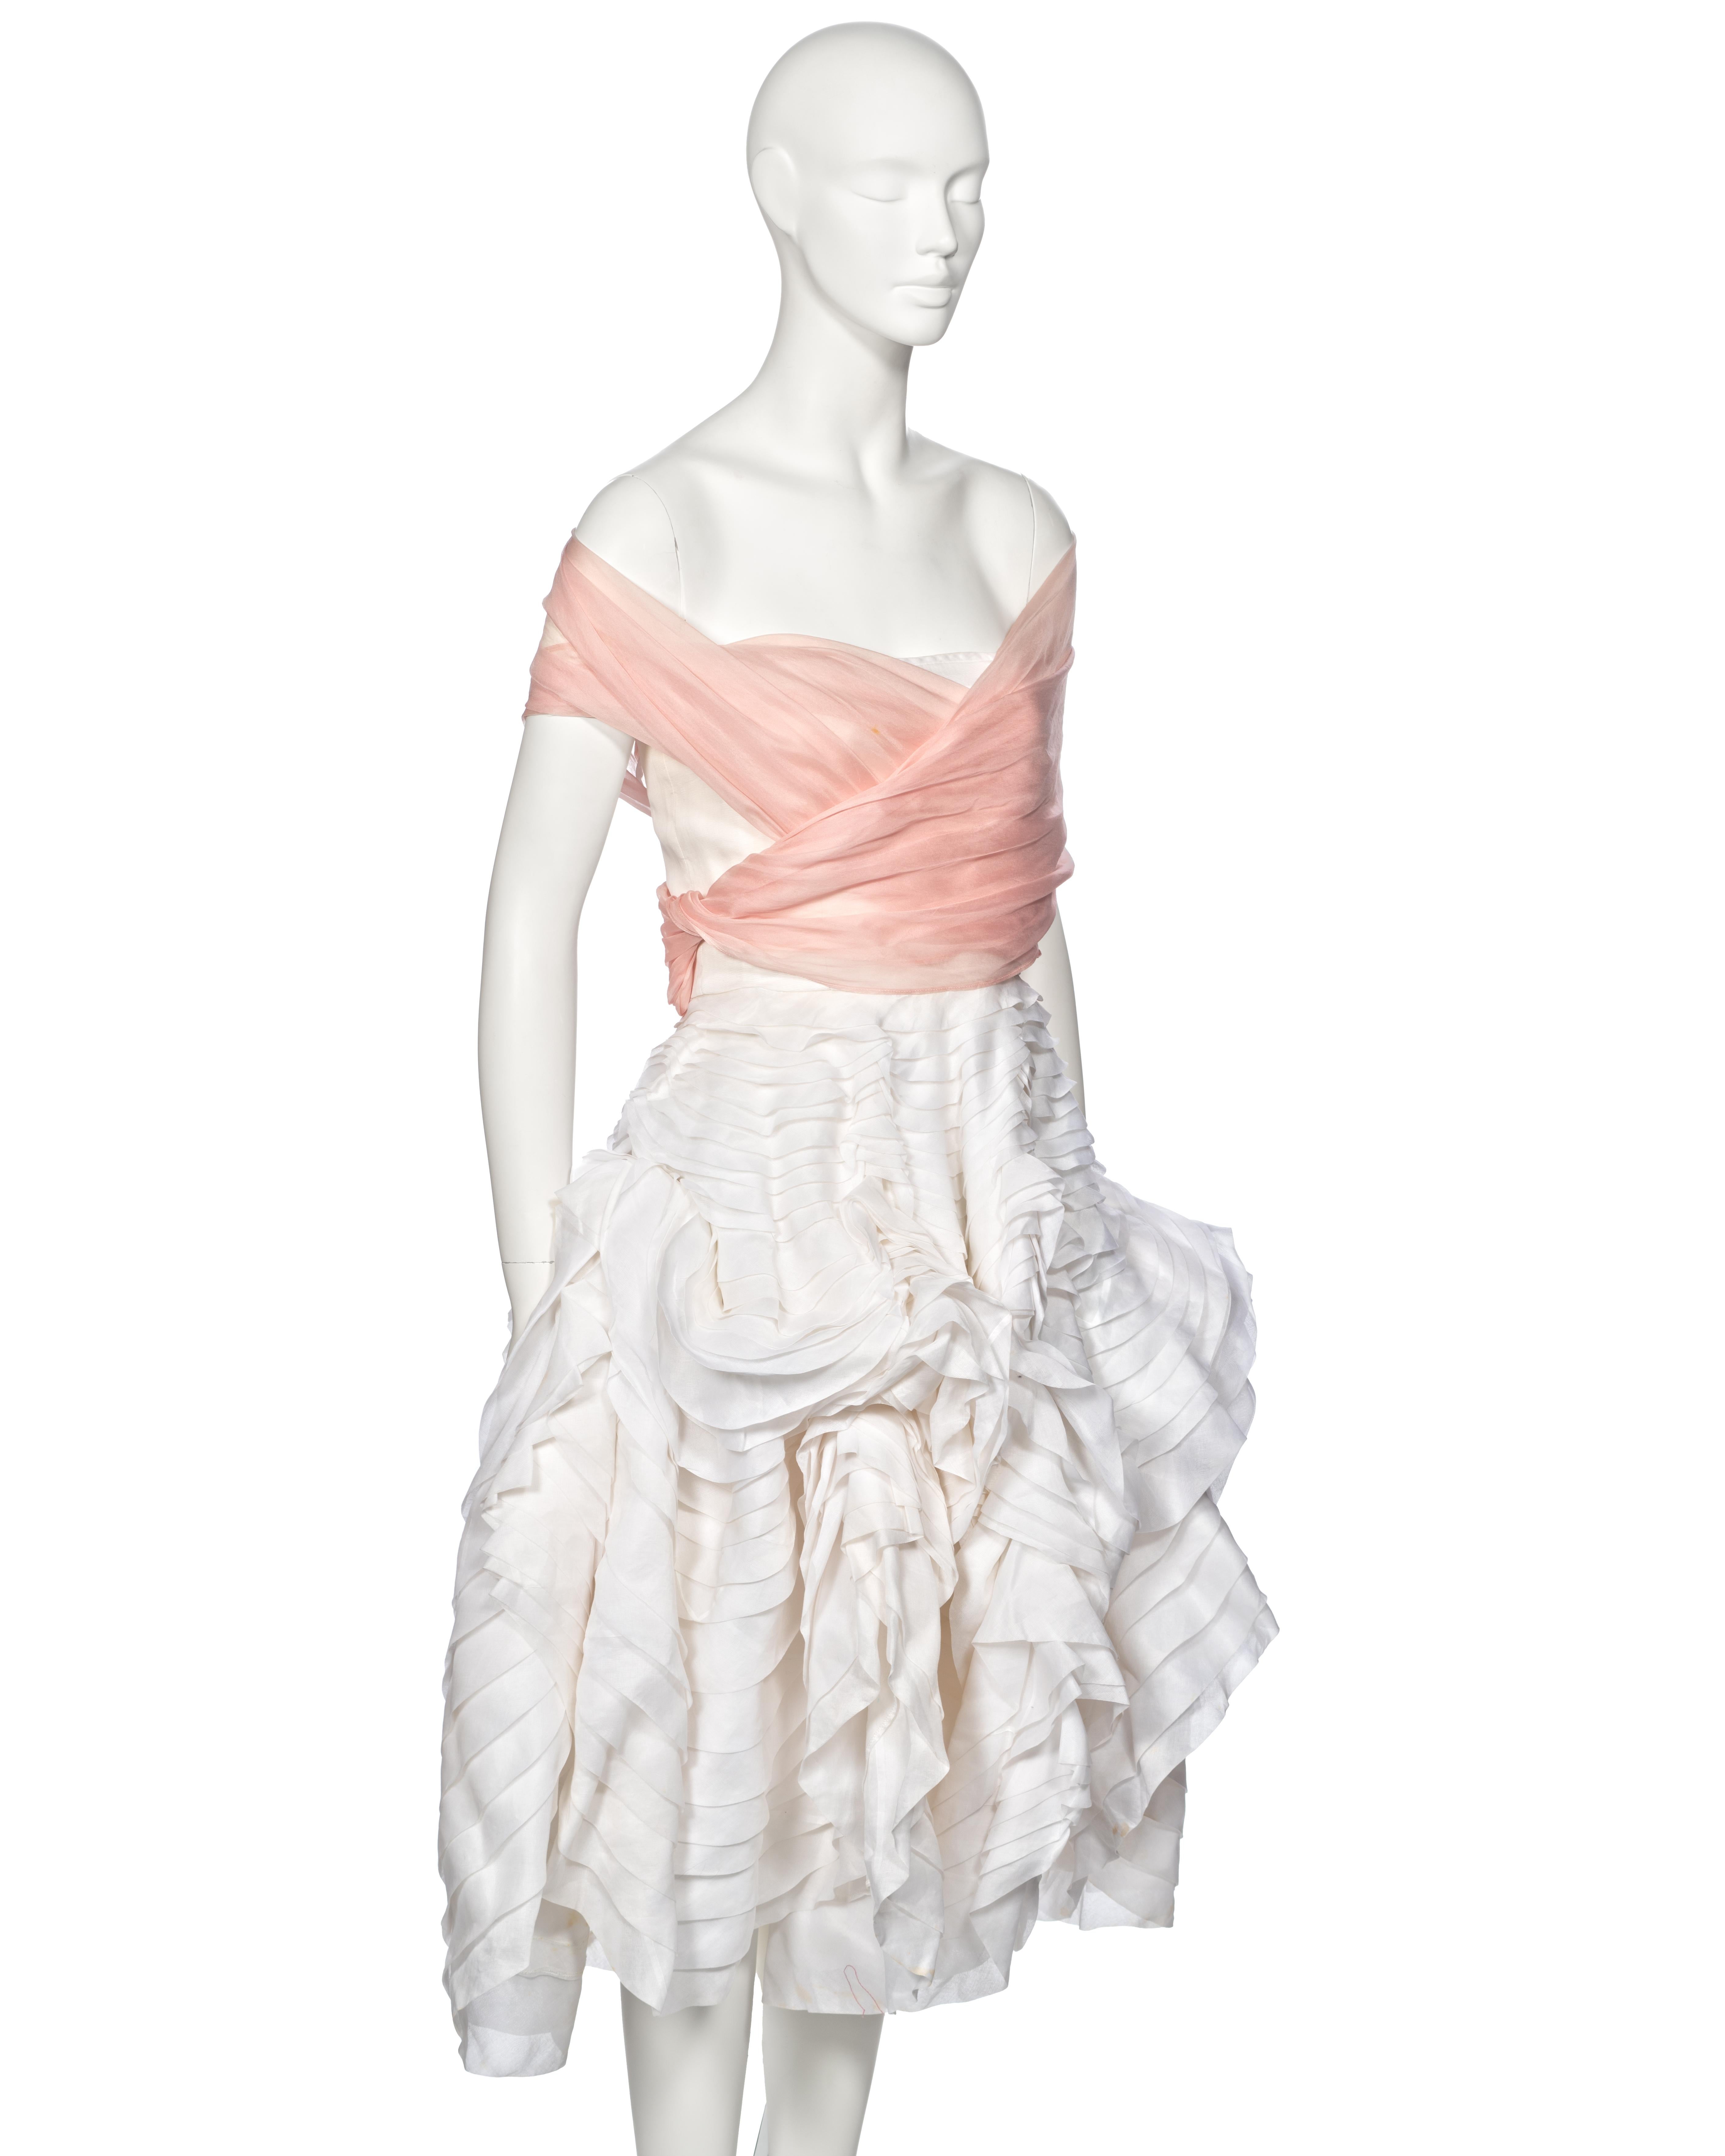 John Galliano Blanche DuBois Clam Dress, ss 1988 For Sale 10